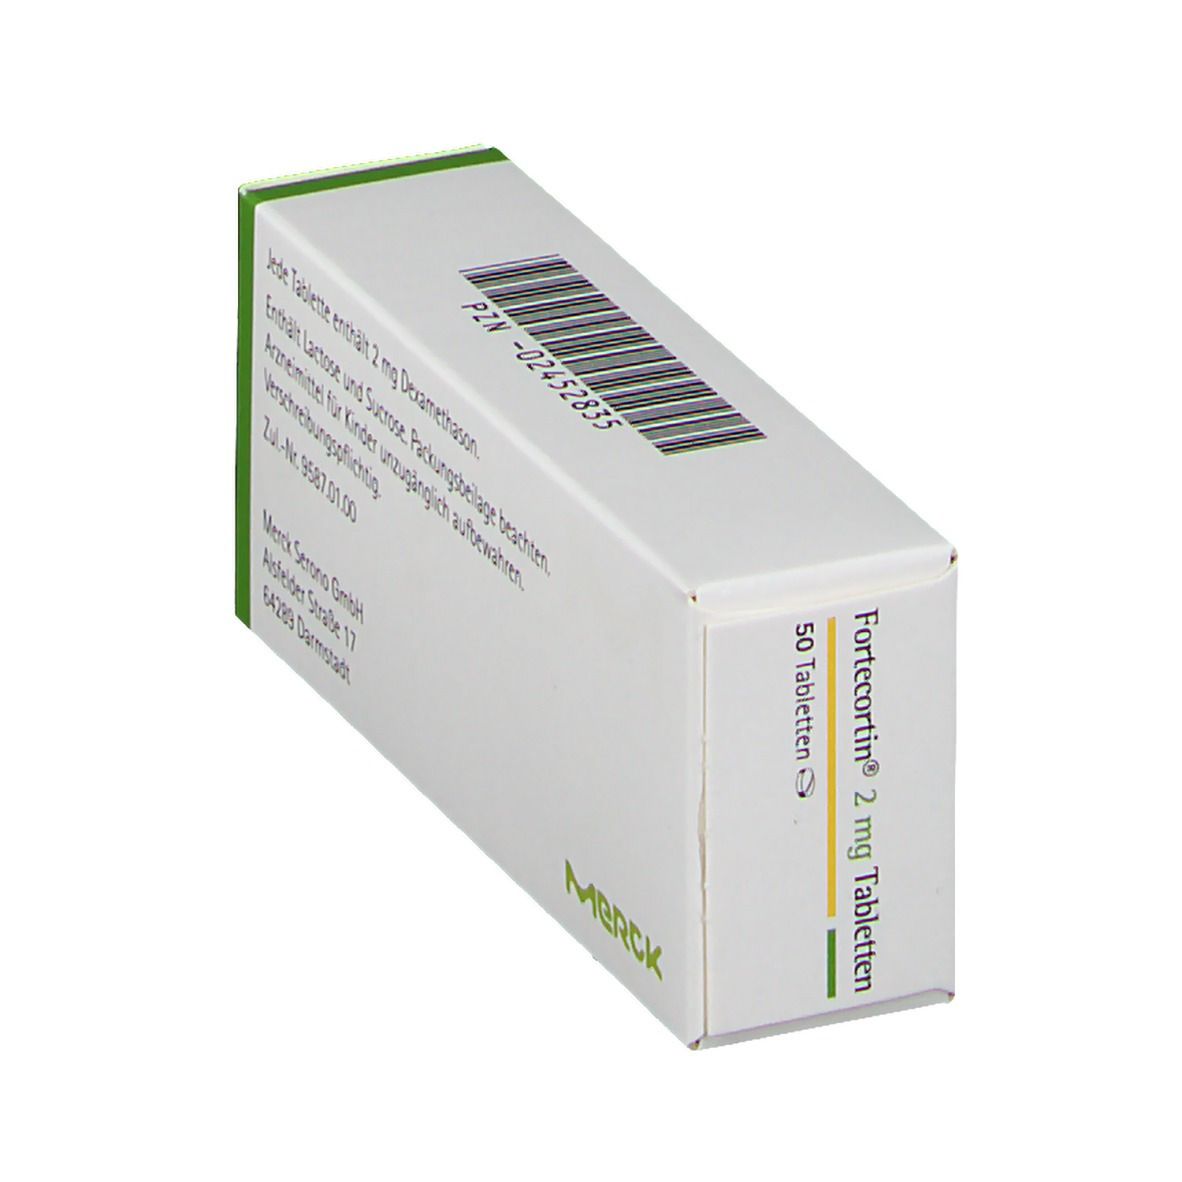 Fortecortin® 2 mg